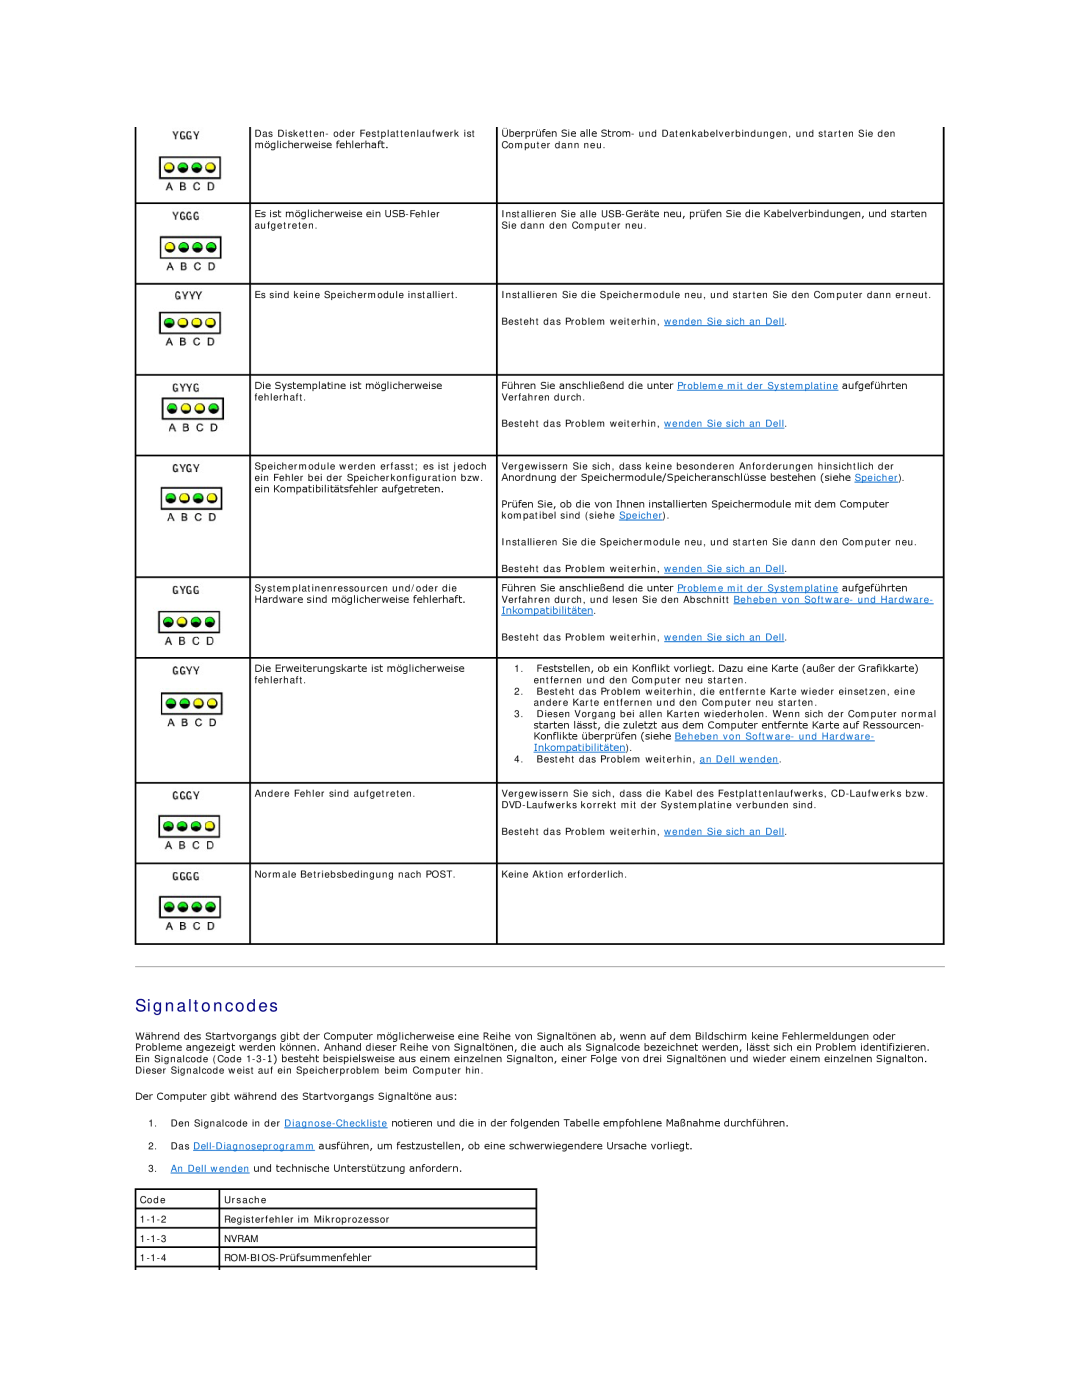 Dell 350 manual Signaltoncodes, Inkompatibilitäten, Code, Ursache 